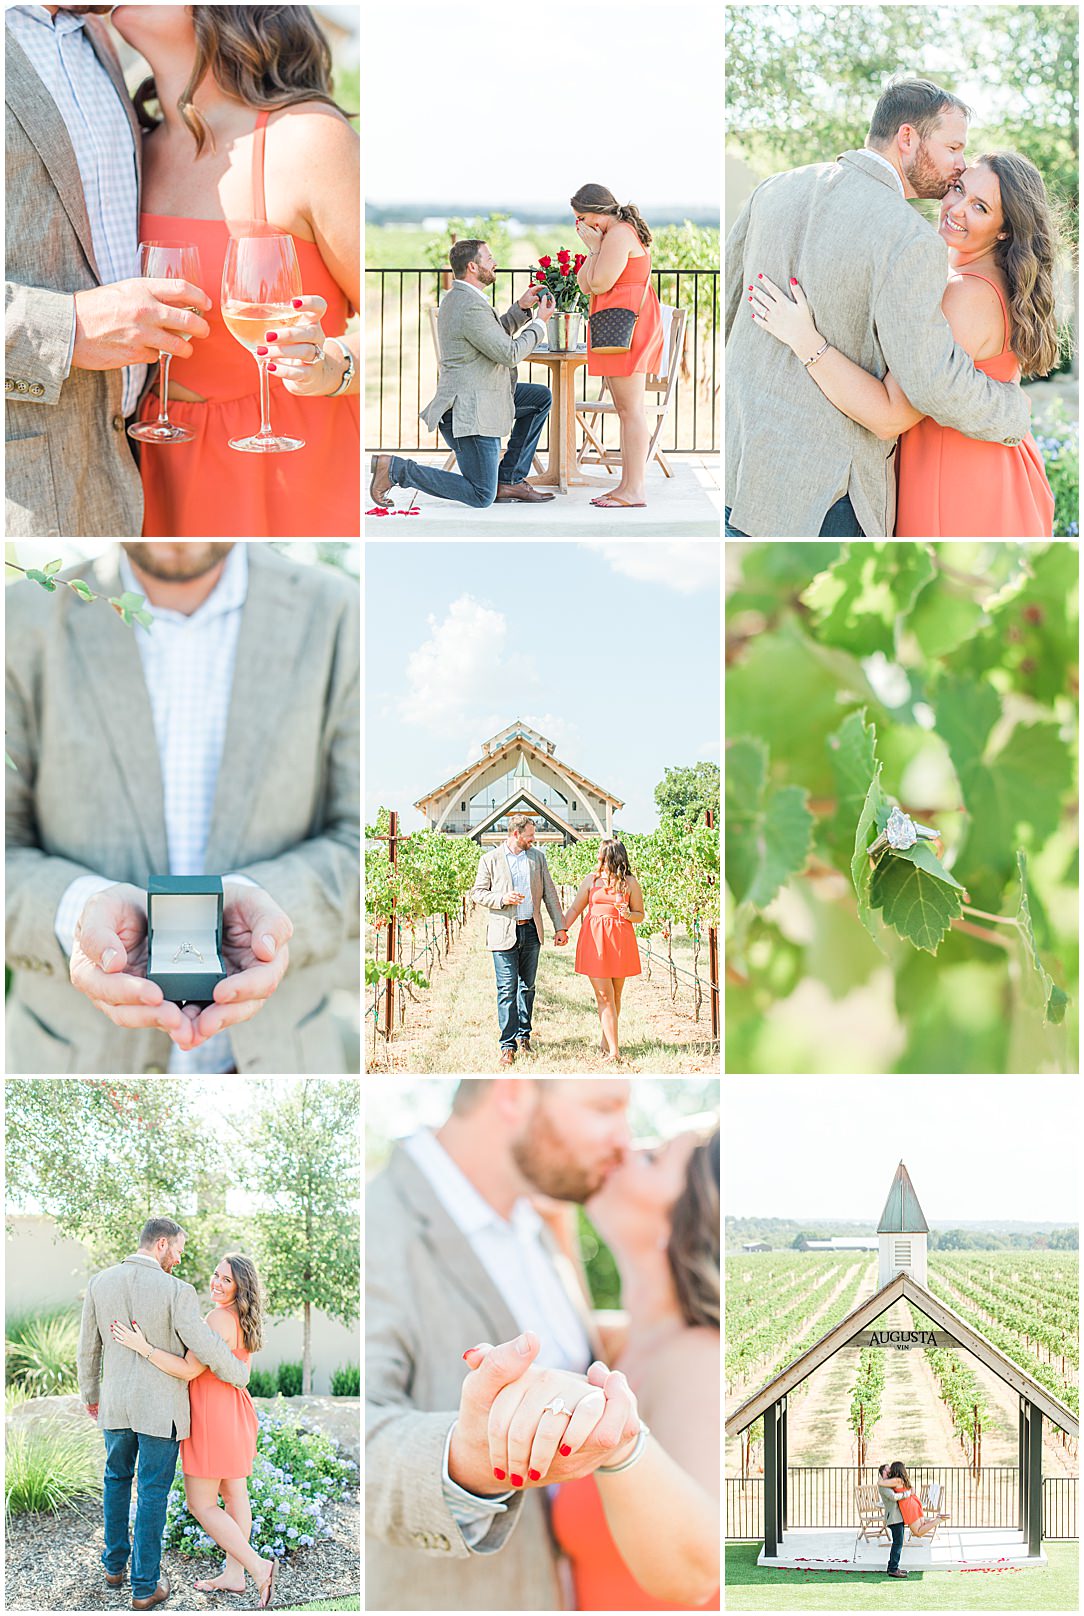 Surprise proposal at Augusta Vin vineyard in Fredericksburg Texas by Allison Jeffers Photography 0063